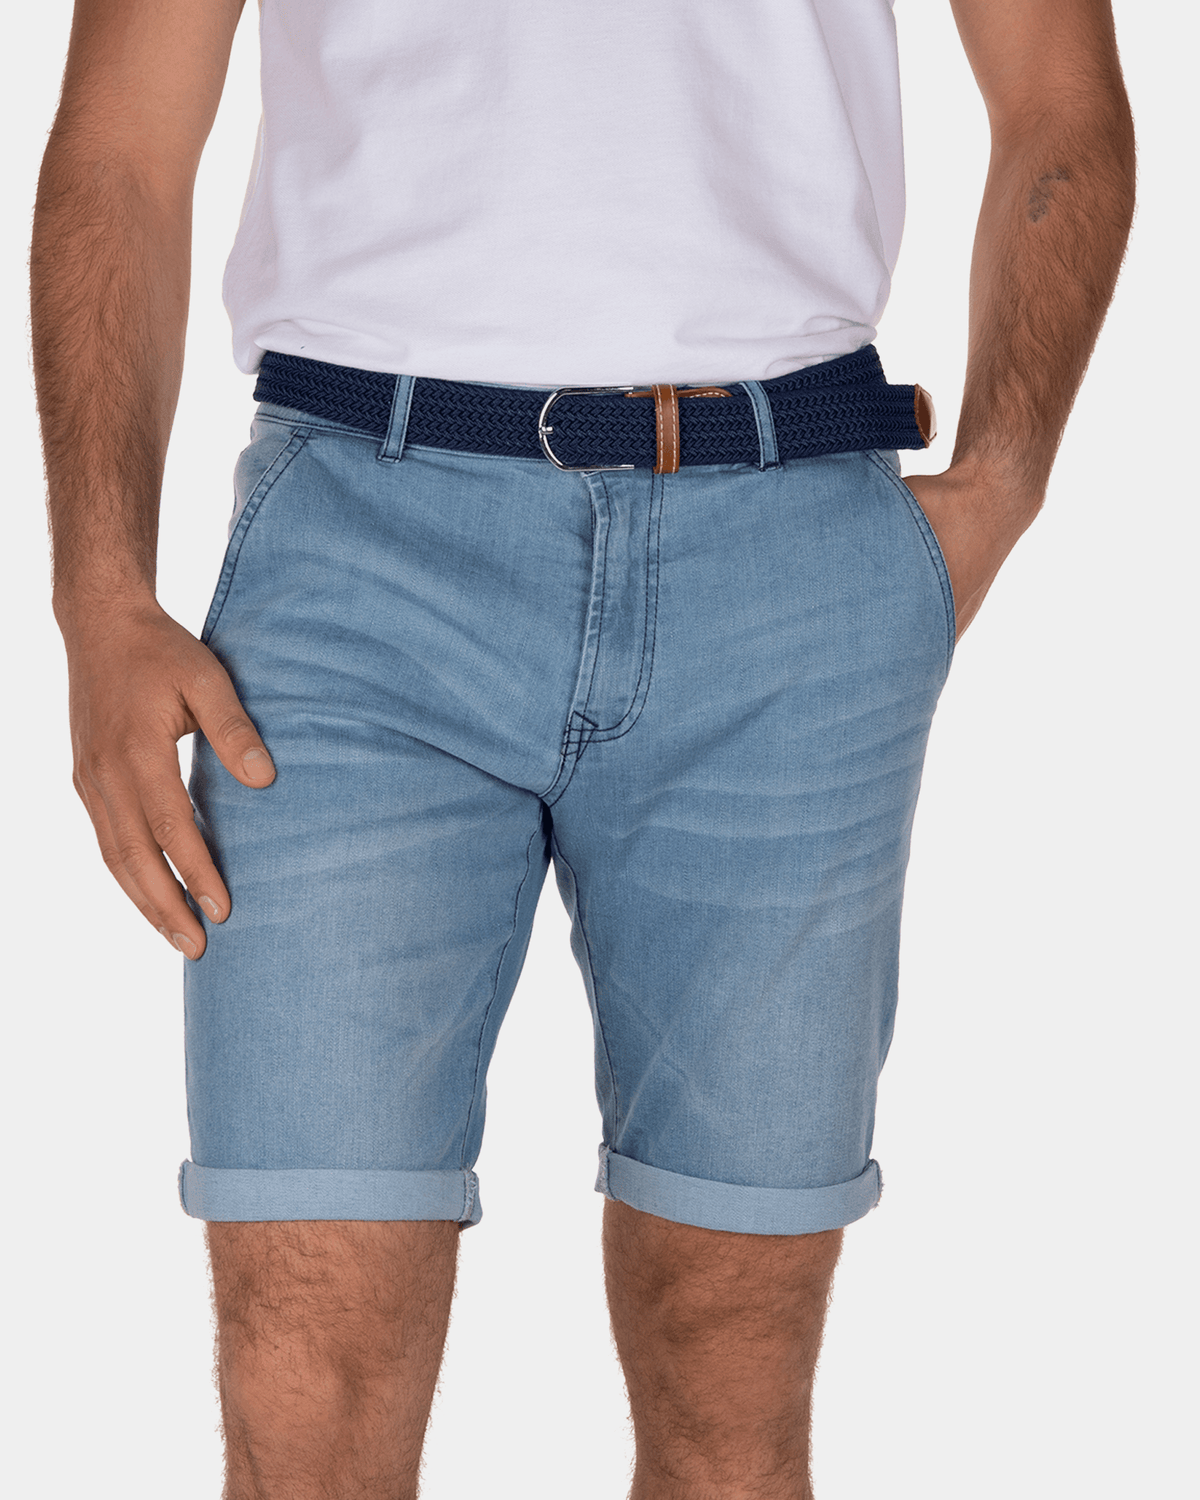 Dunedine jeans shorts - Light Stone